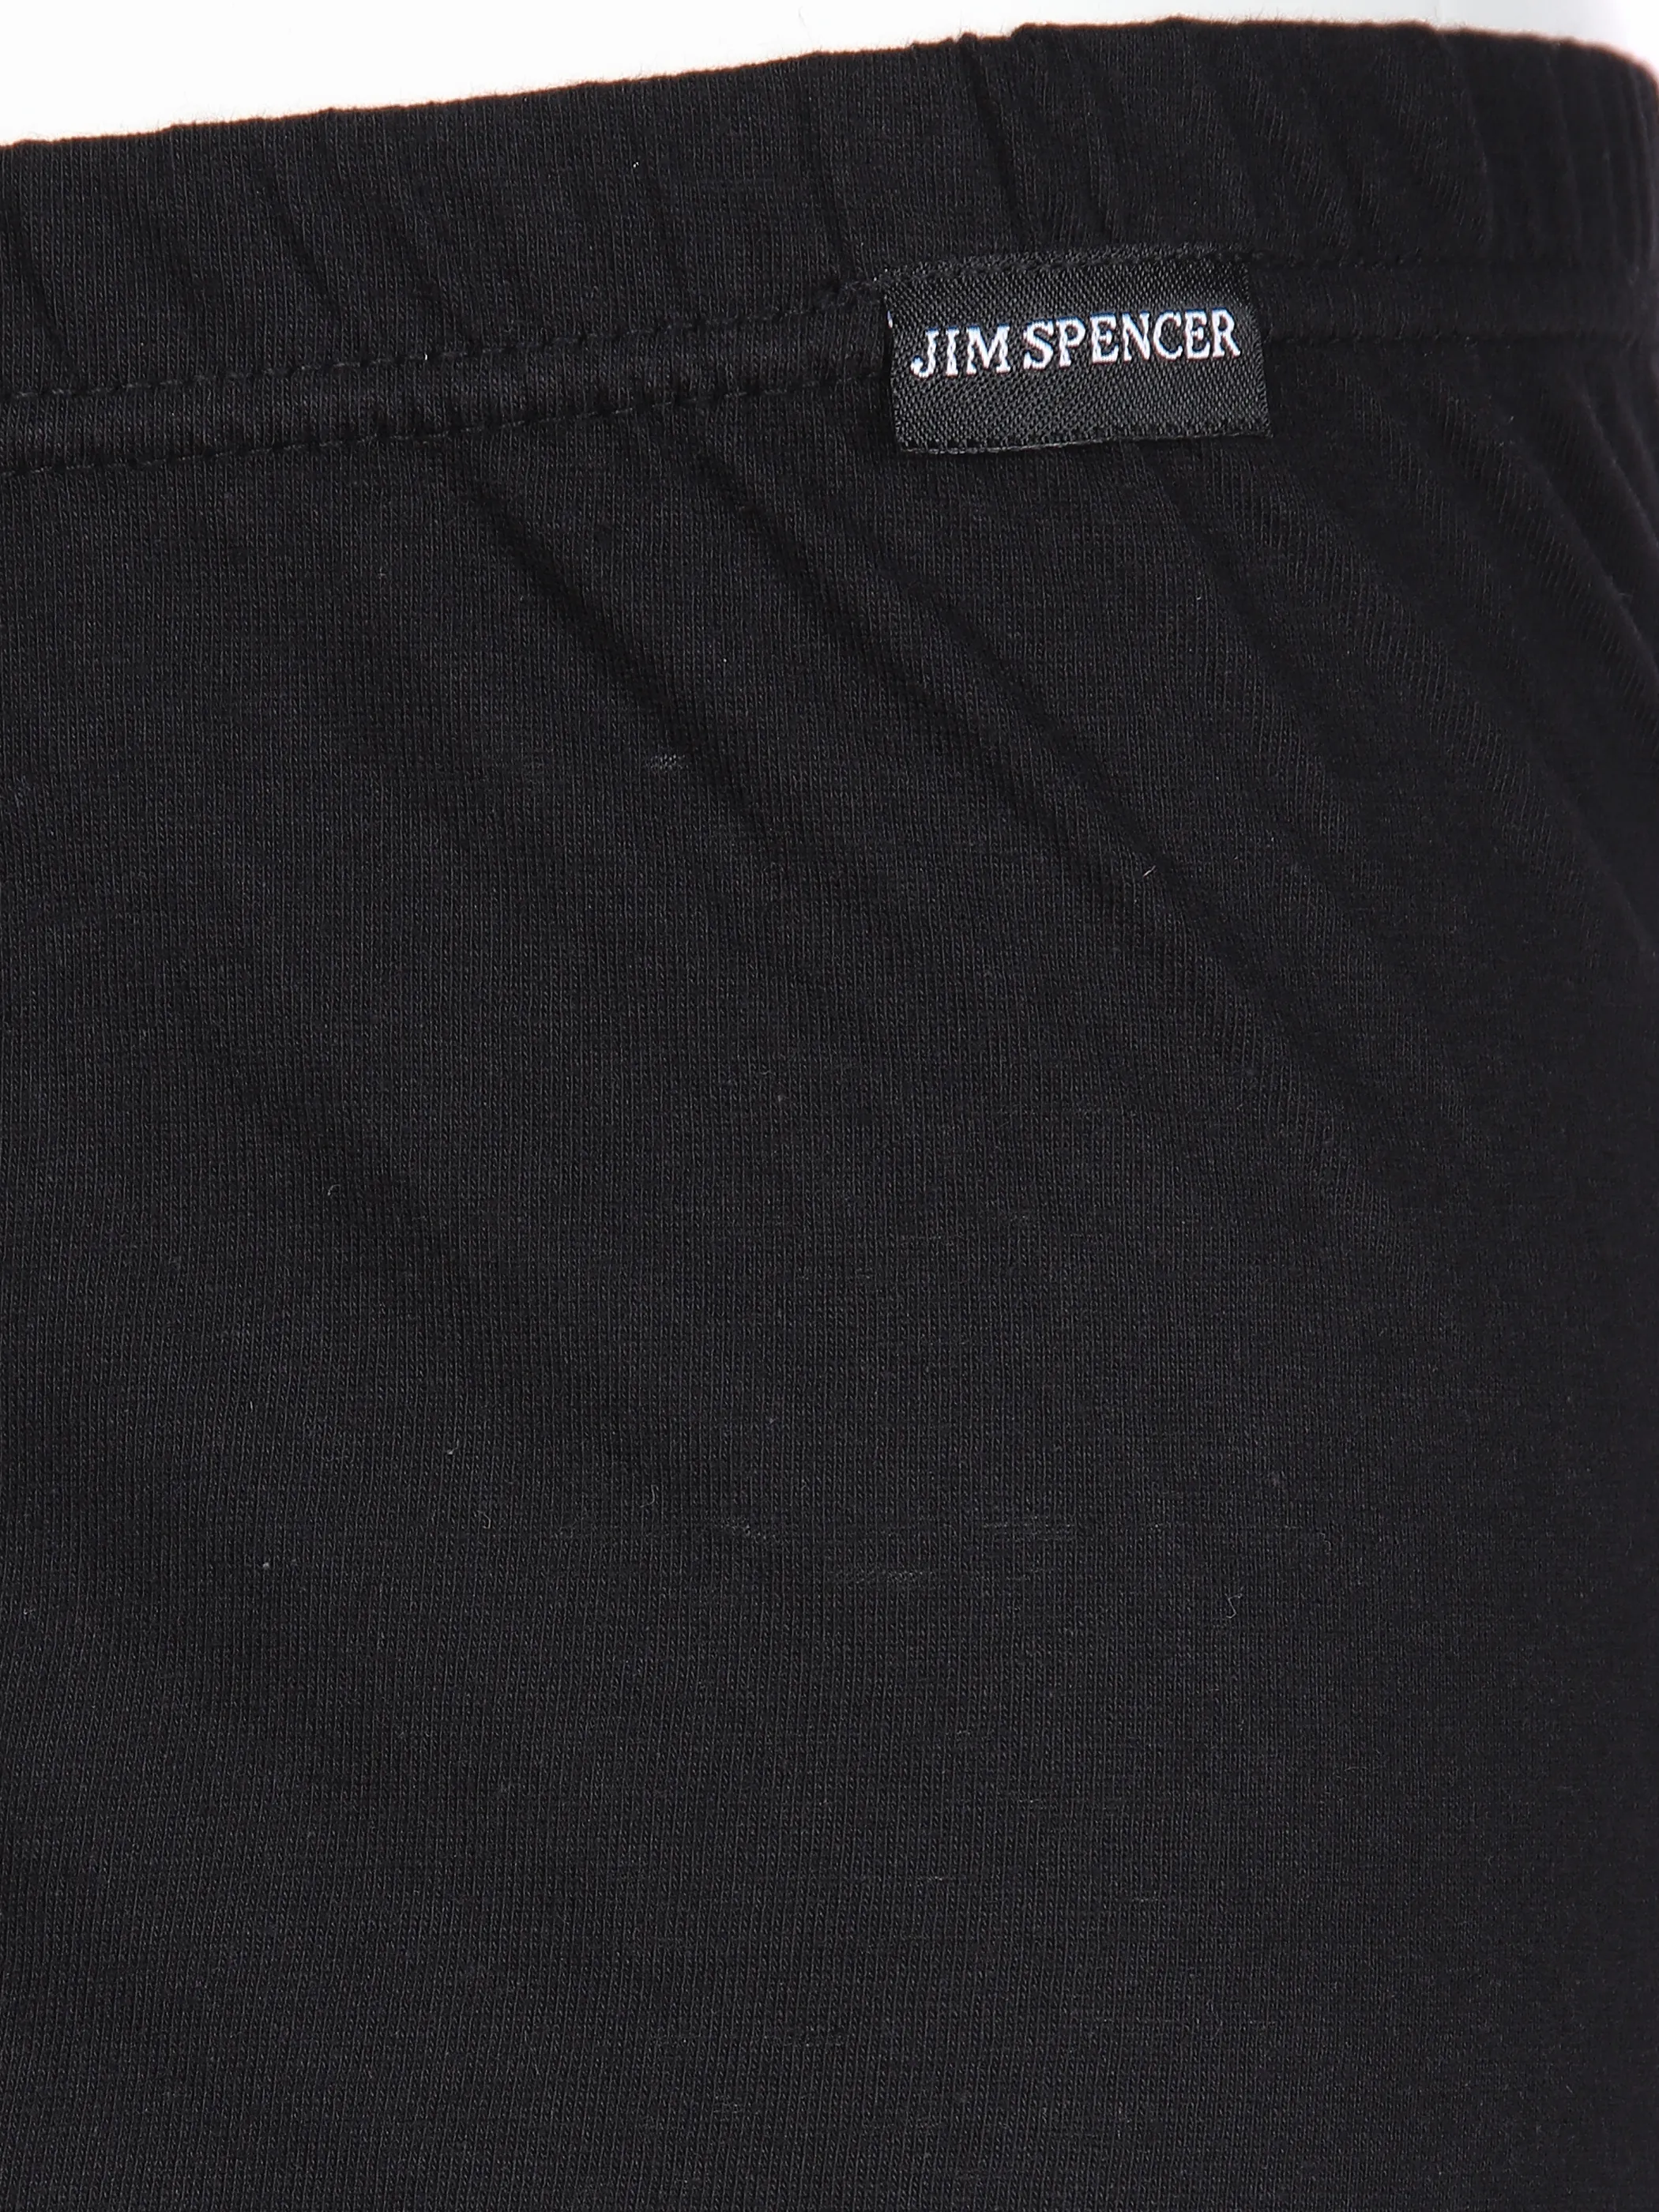 Jim Spencer He-Boxershorts 3er Pack Schwarz 648265 SCHWARZ 3